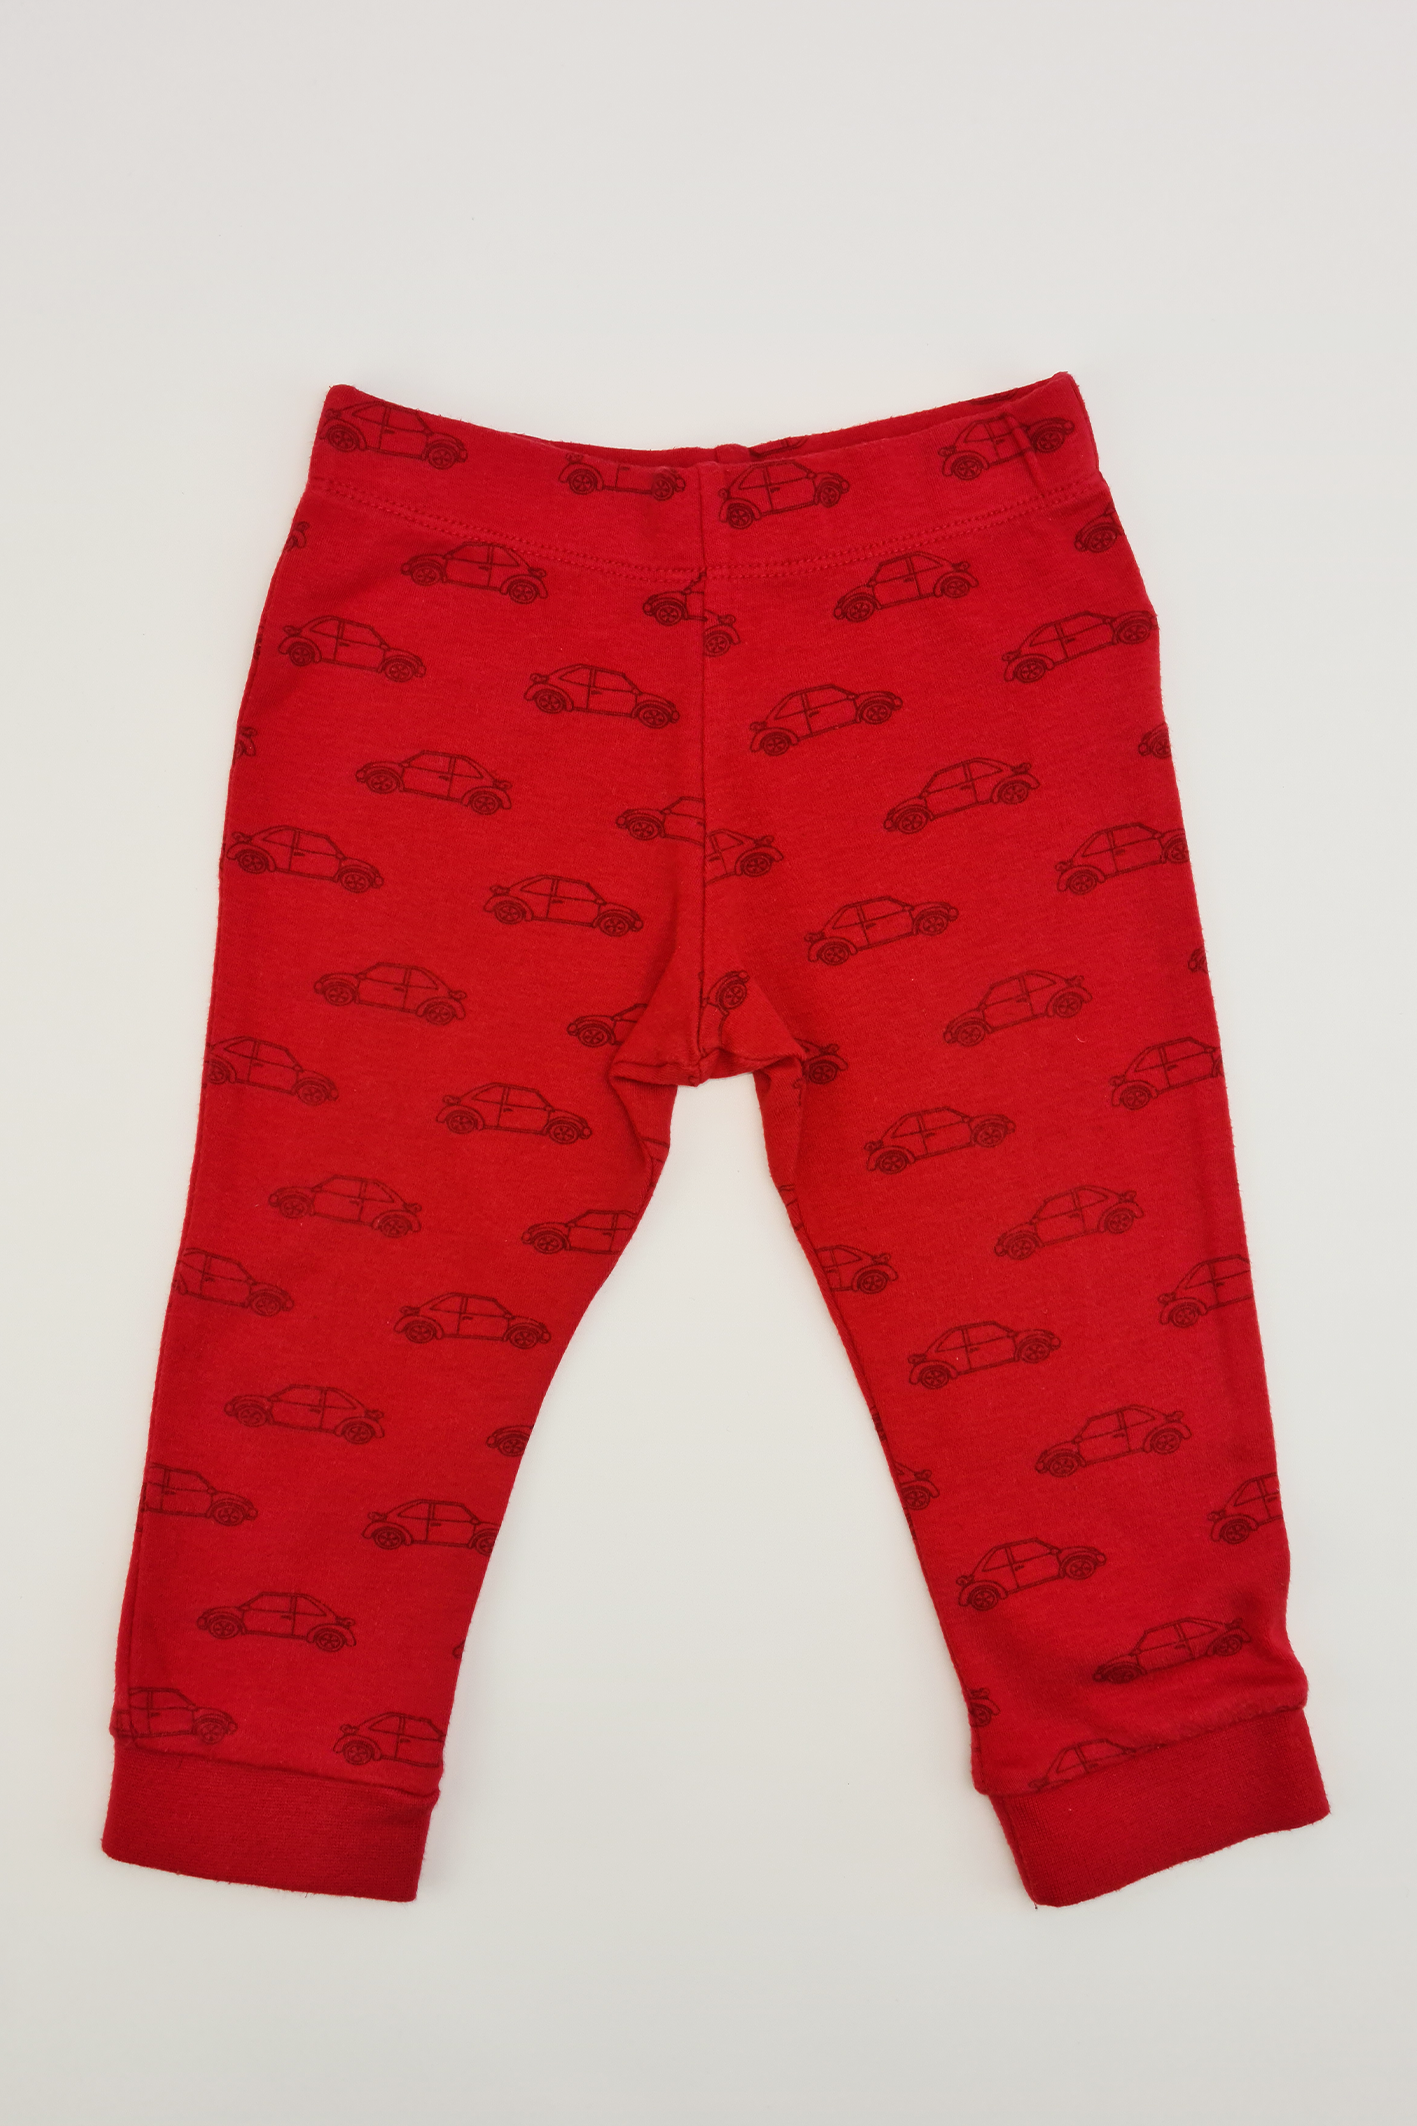 9-12m - Red car pyjama bottoms